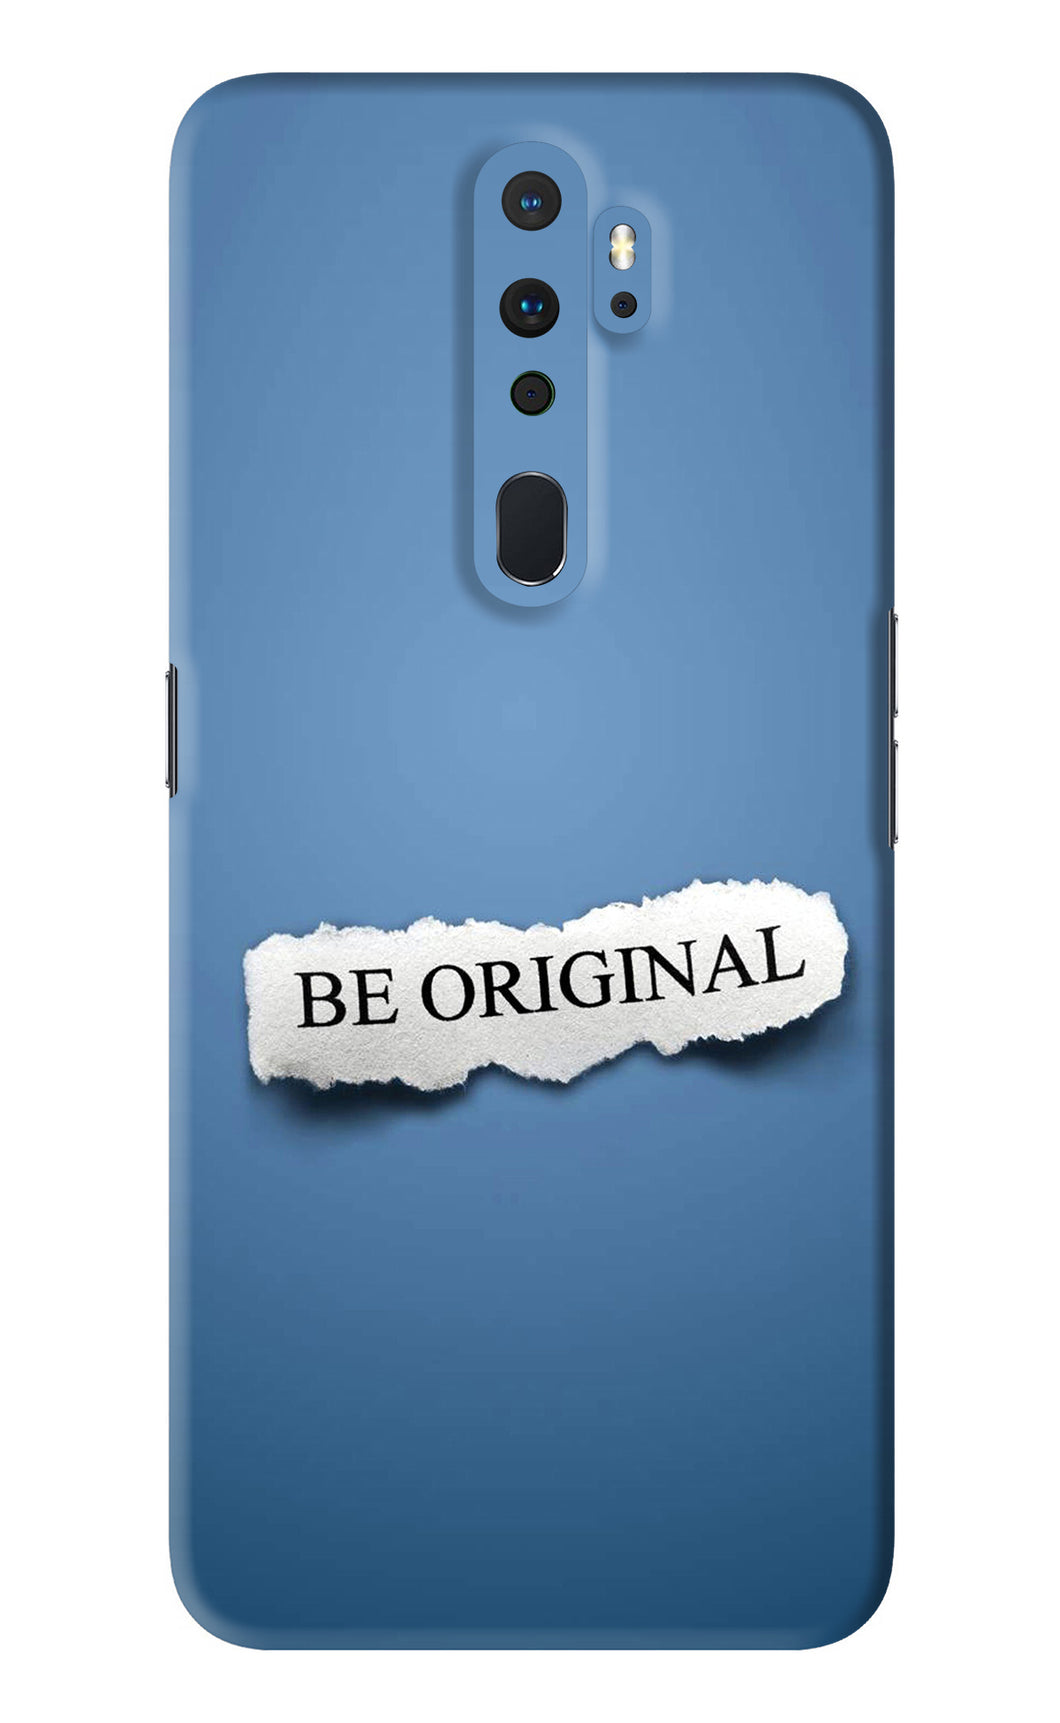 Be Original Oppo A9 2020 Back Skin Wrap